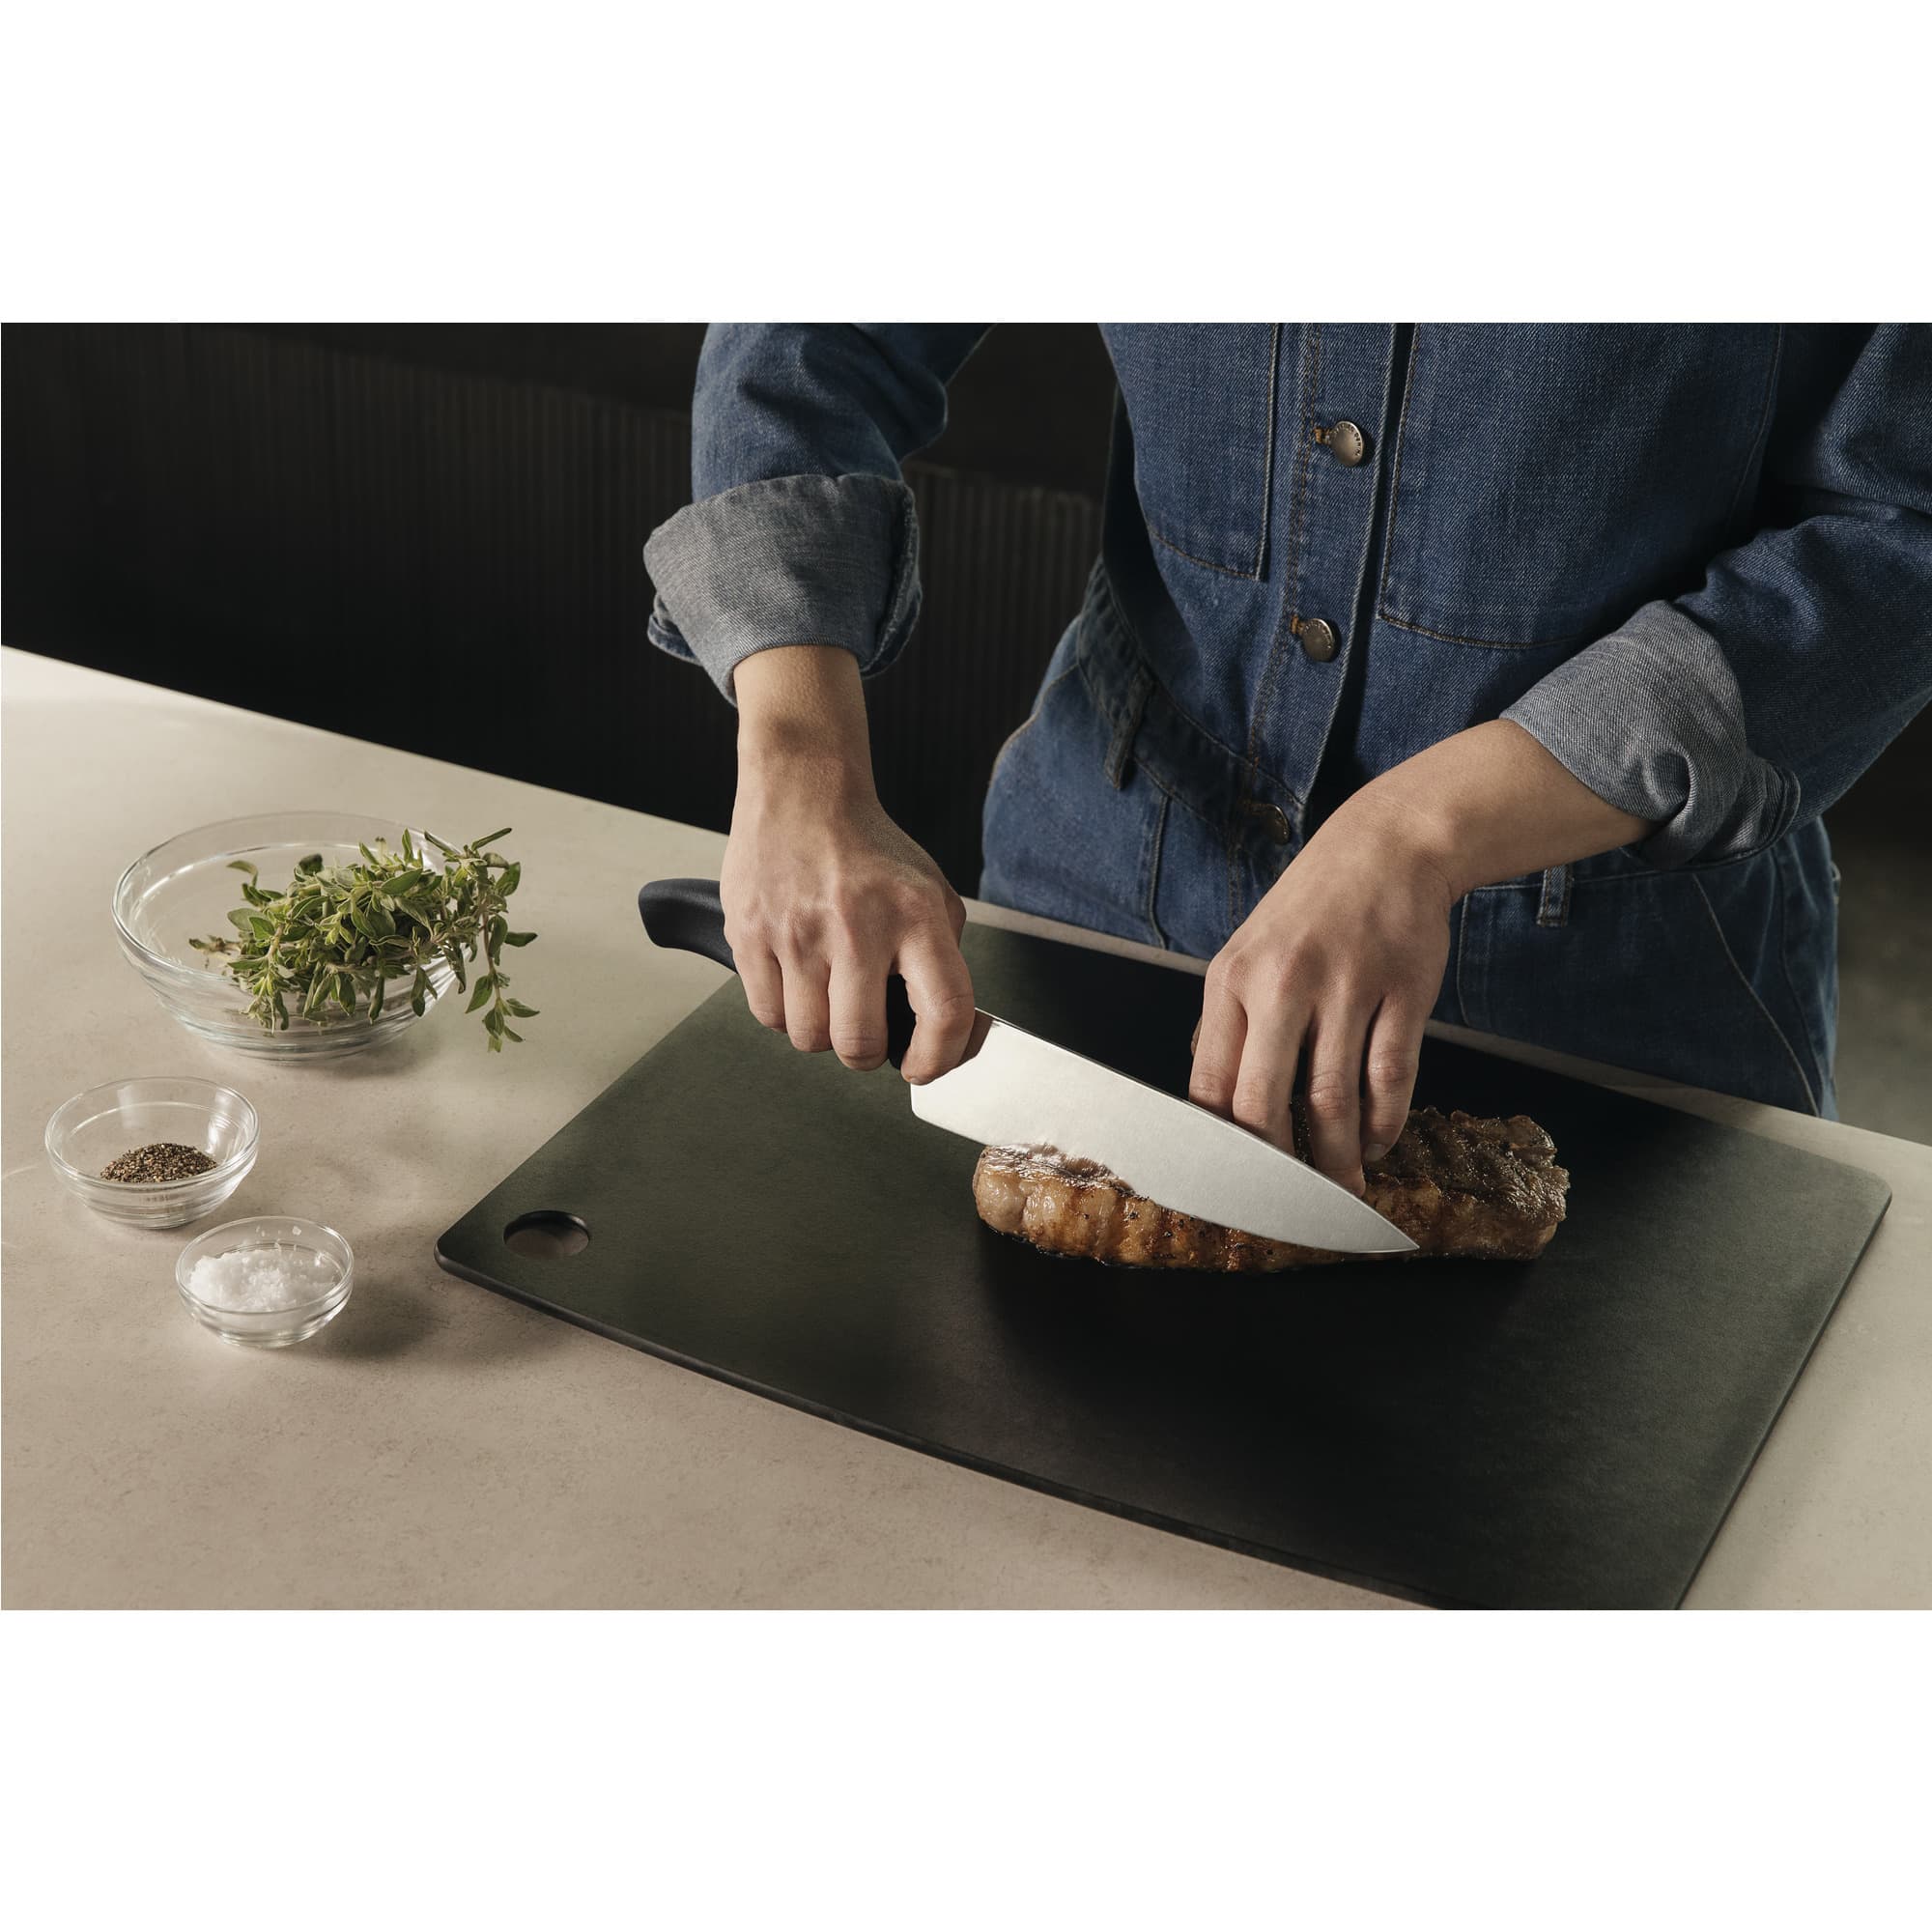 Victorinox® Swiss Classic 8-Inch Chef's Knife